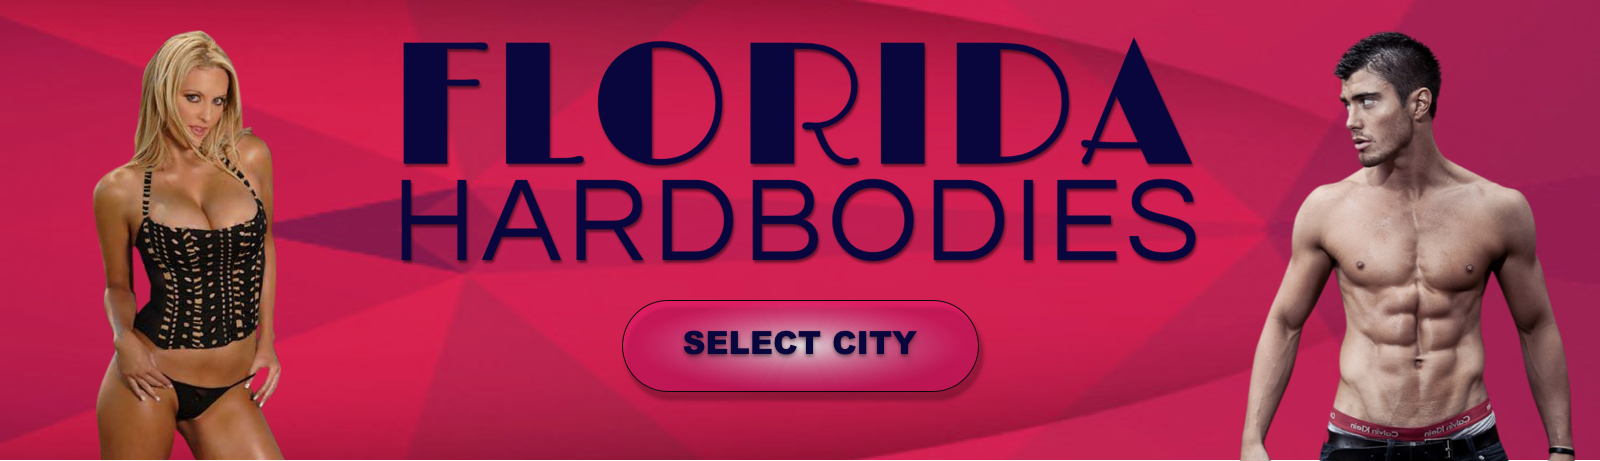 Florida Hardbodies - Local Strippers | Exotic Dancers Logo Banner